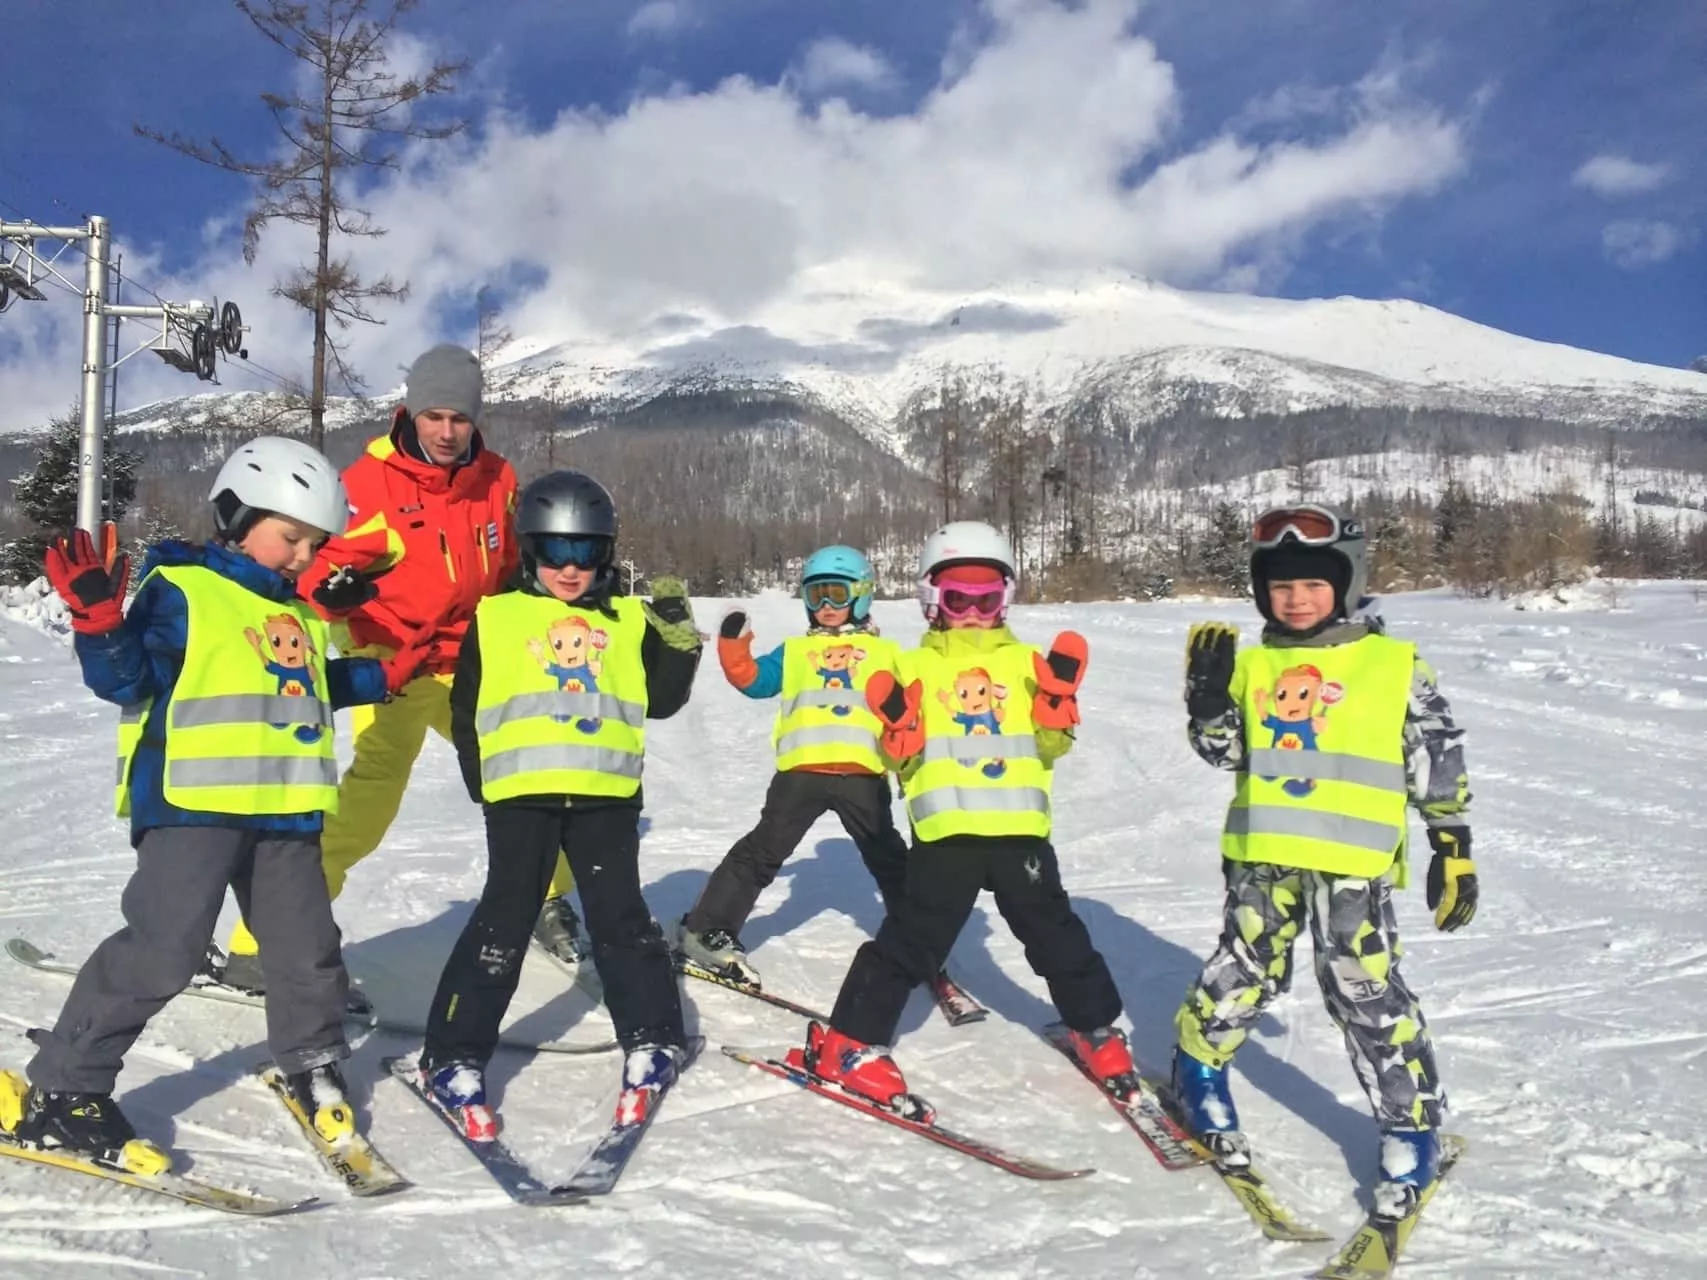 Lyziarska Ski Premiere in Slovakia, Europe | Snowboarding,Skiing - Rated 1